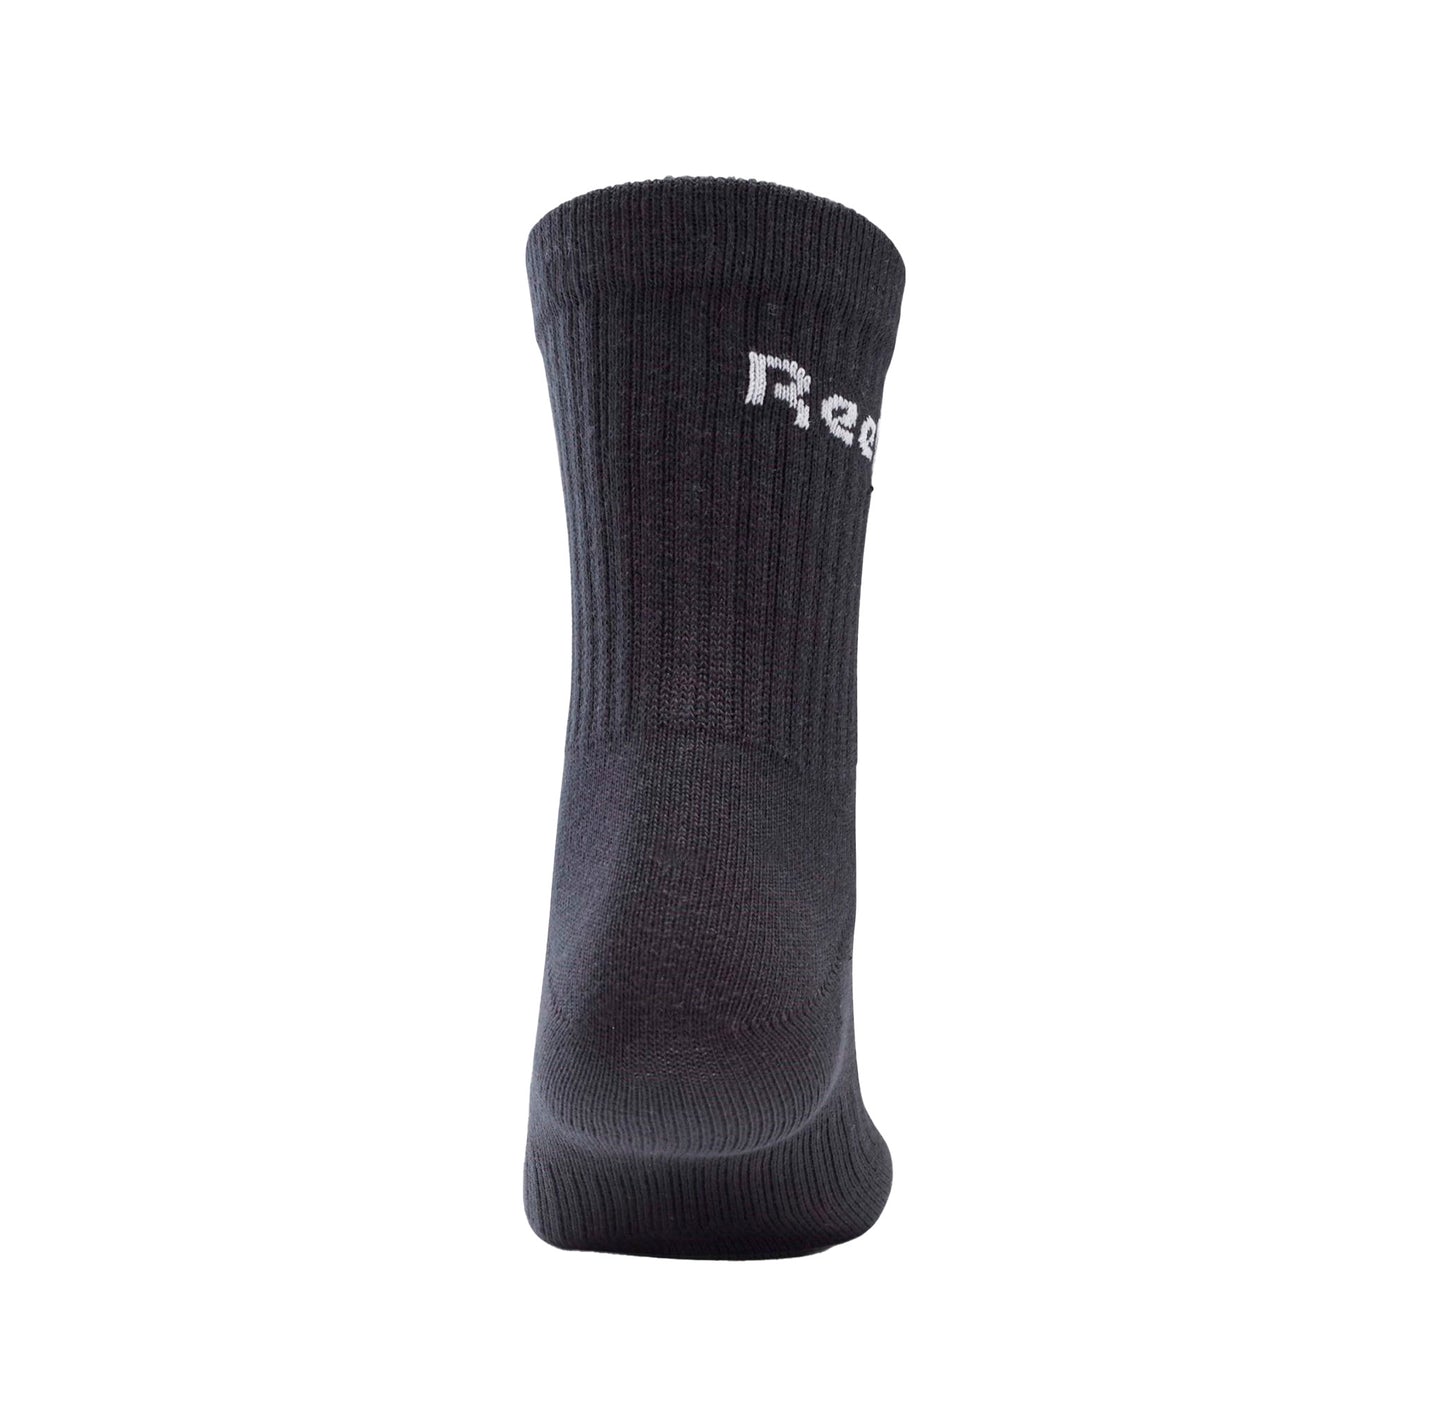 Pack 3 pairs of Reebok Active Core socks